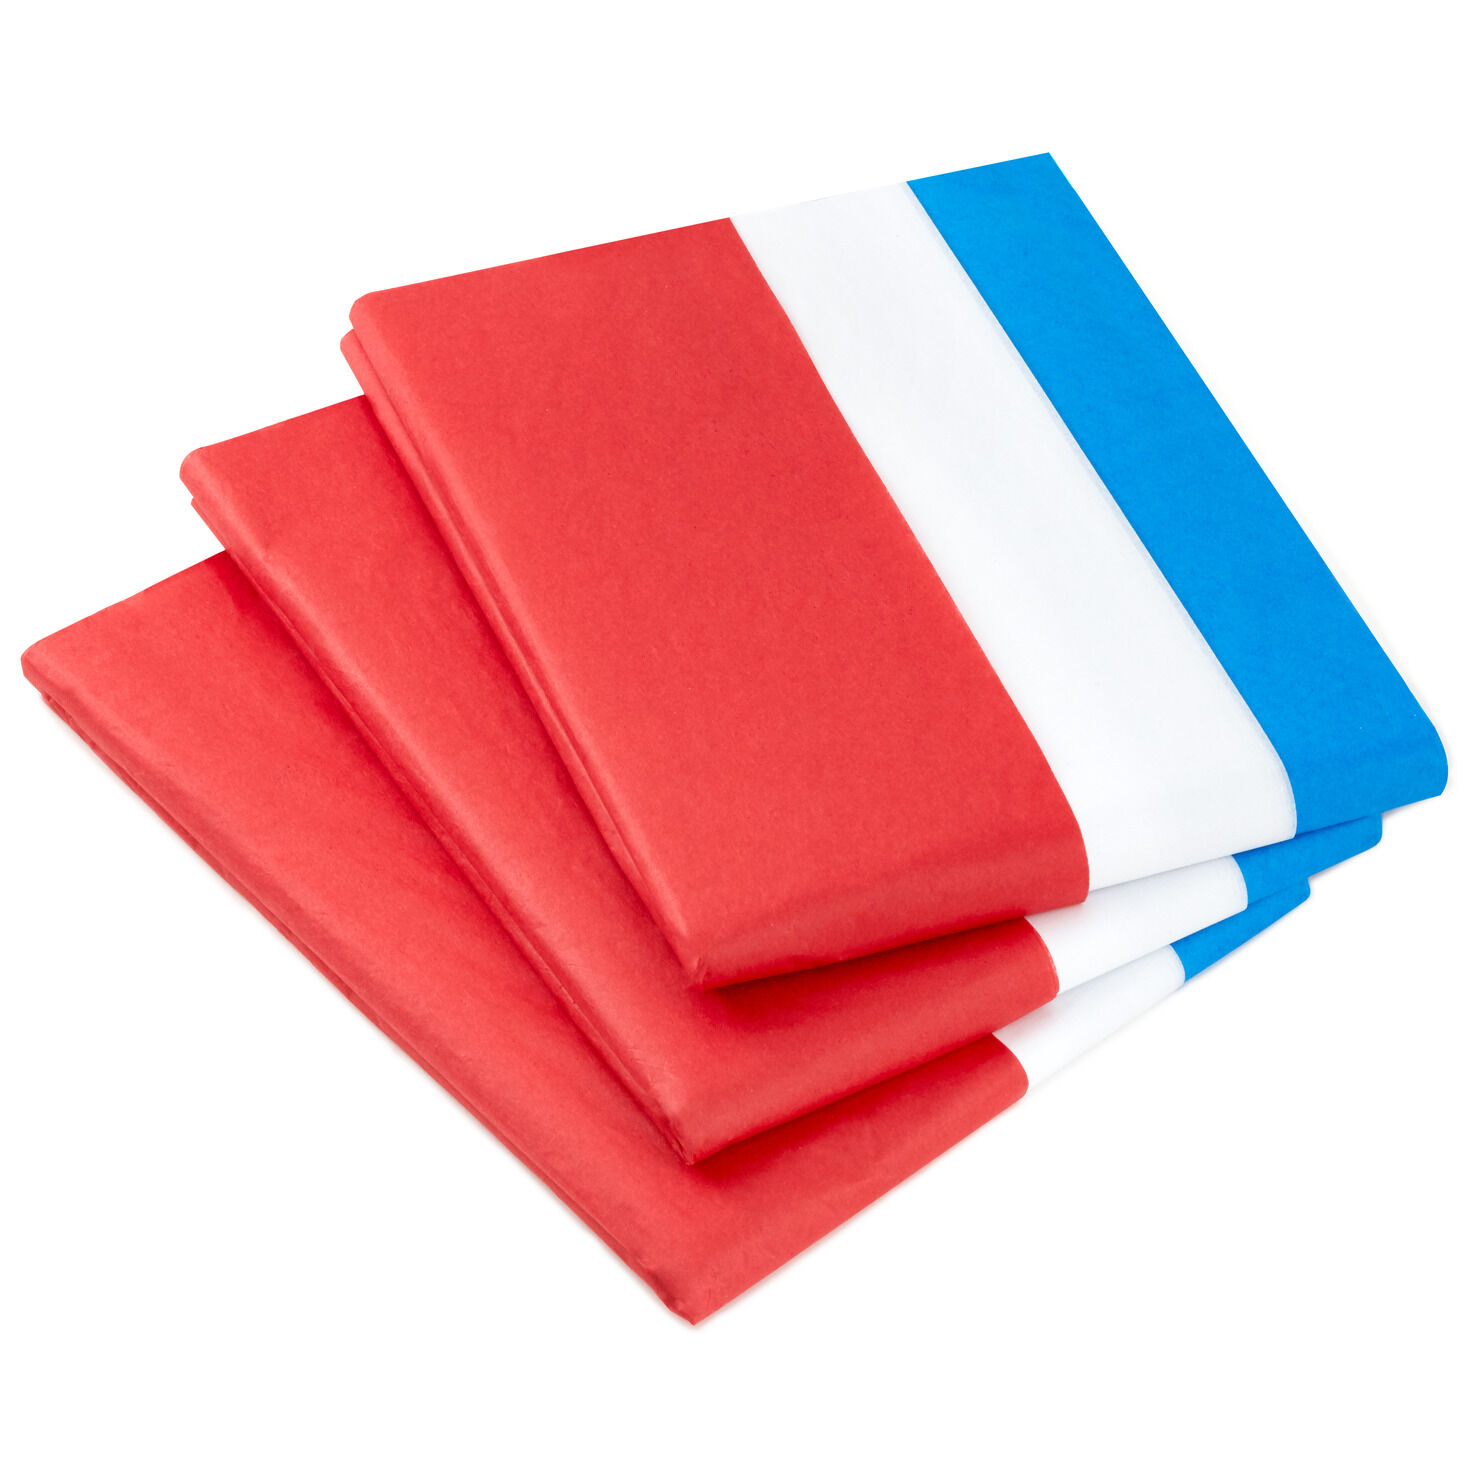 Red Scandinavian Tissue Paper 20x30 - 240 Sheets at JAM Paper